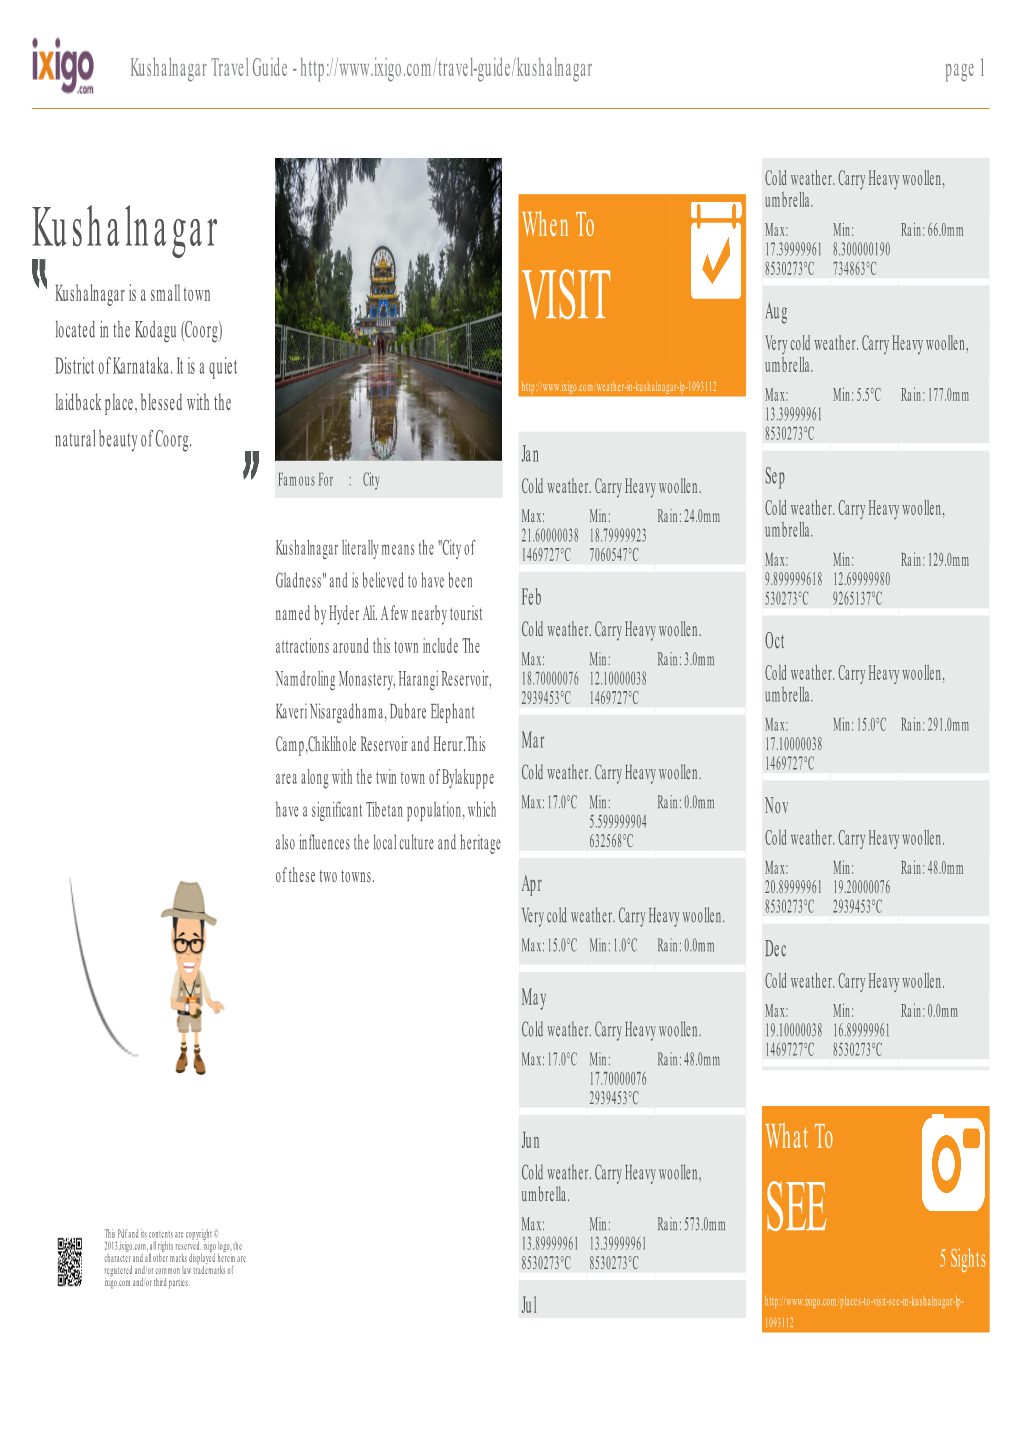 Kushalnagar Travel Guide - Page 1